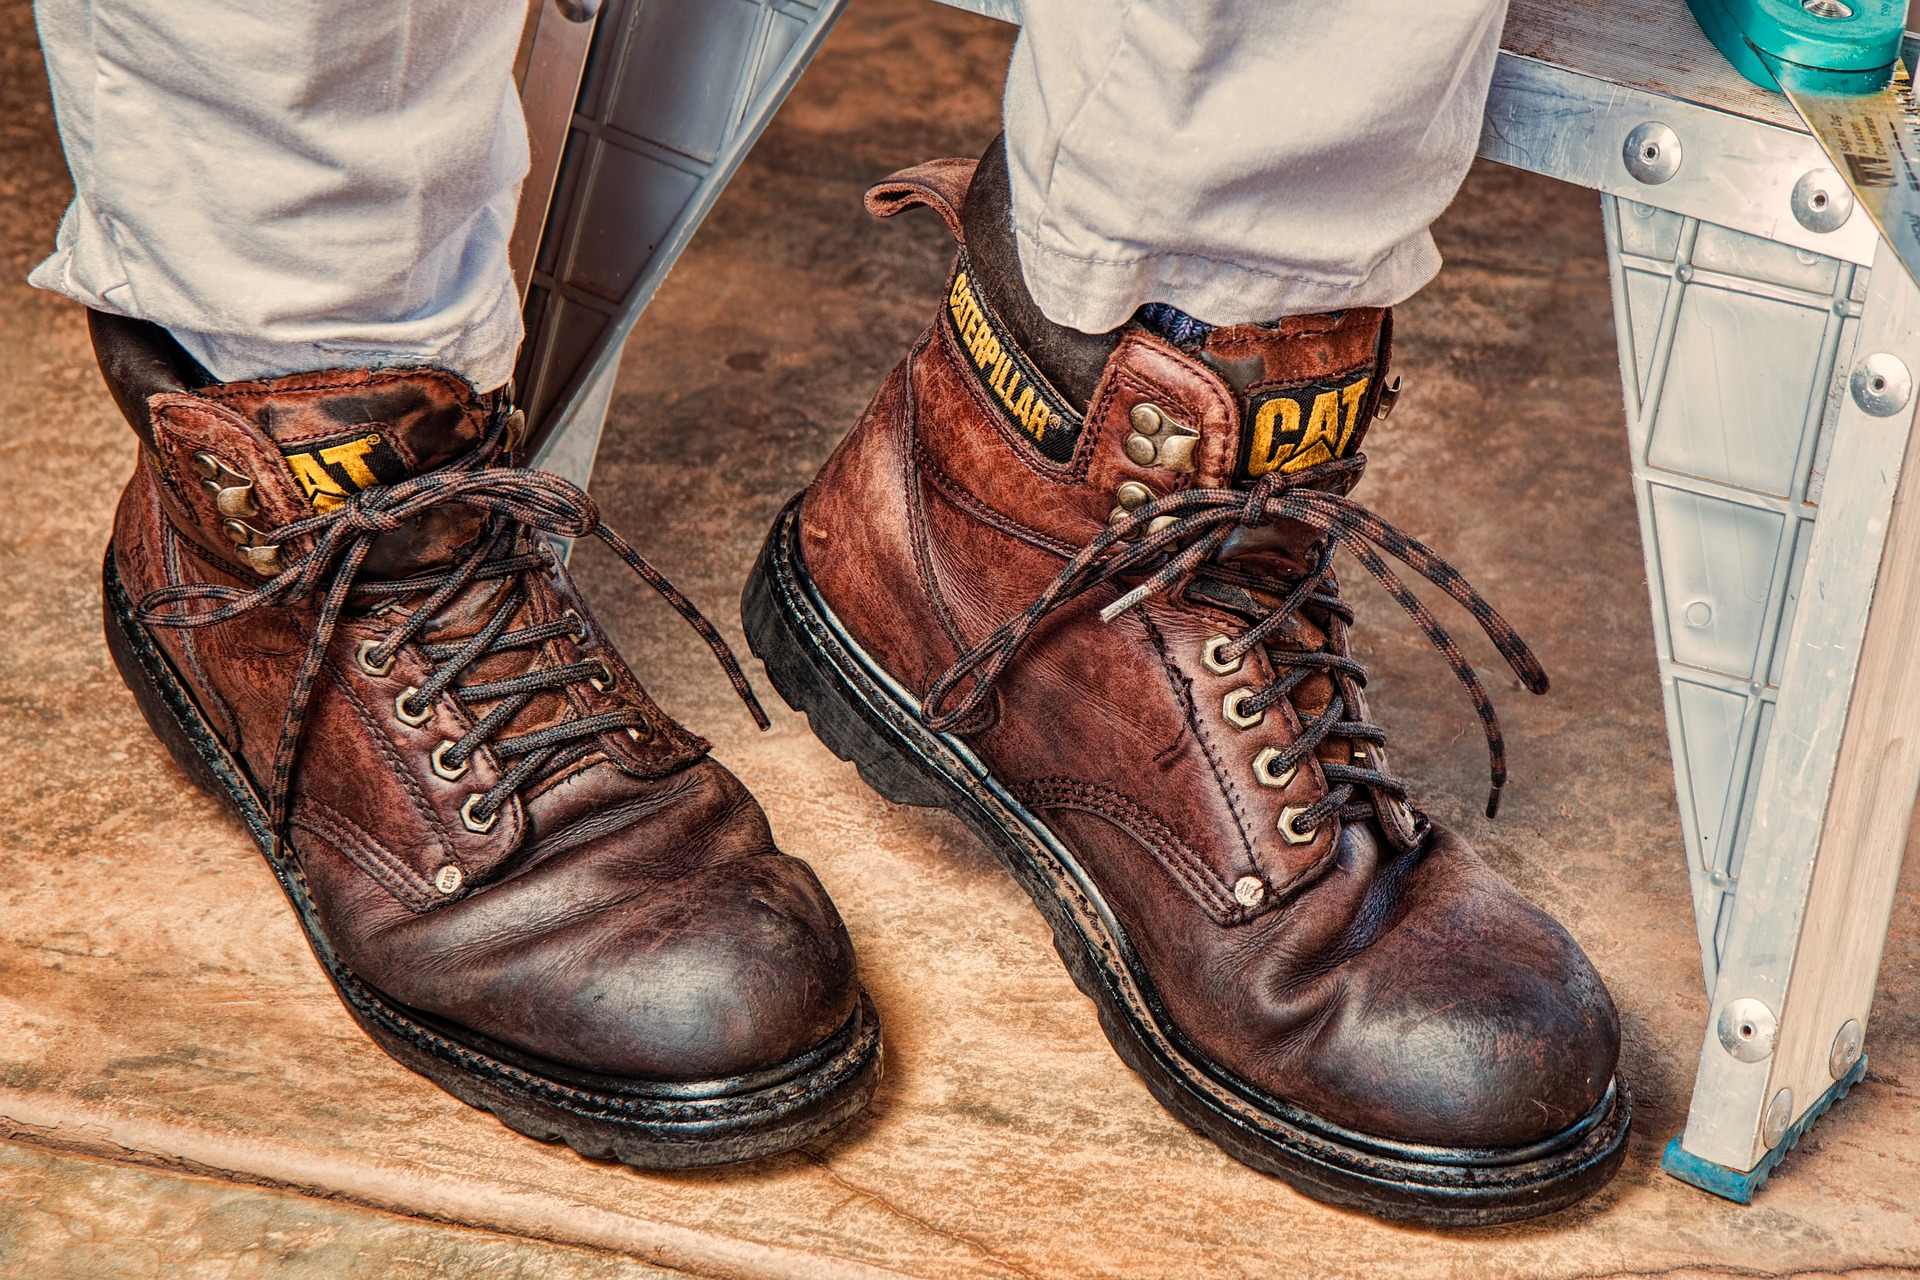 work-boots-889816_1920.jpg